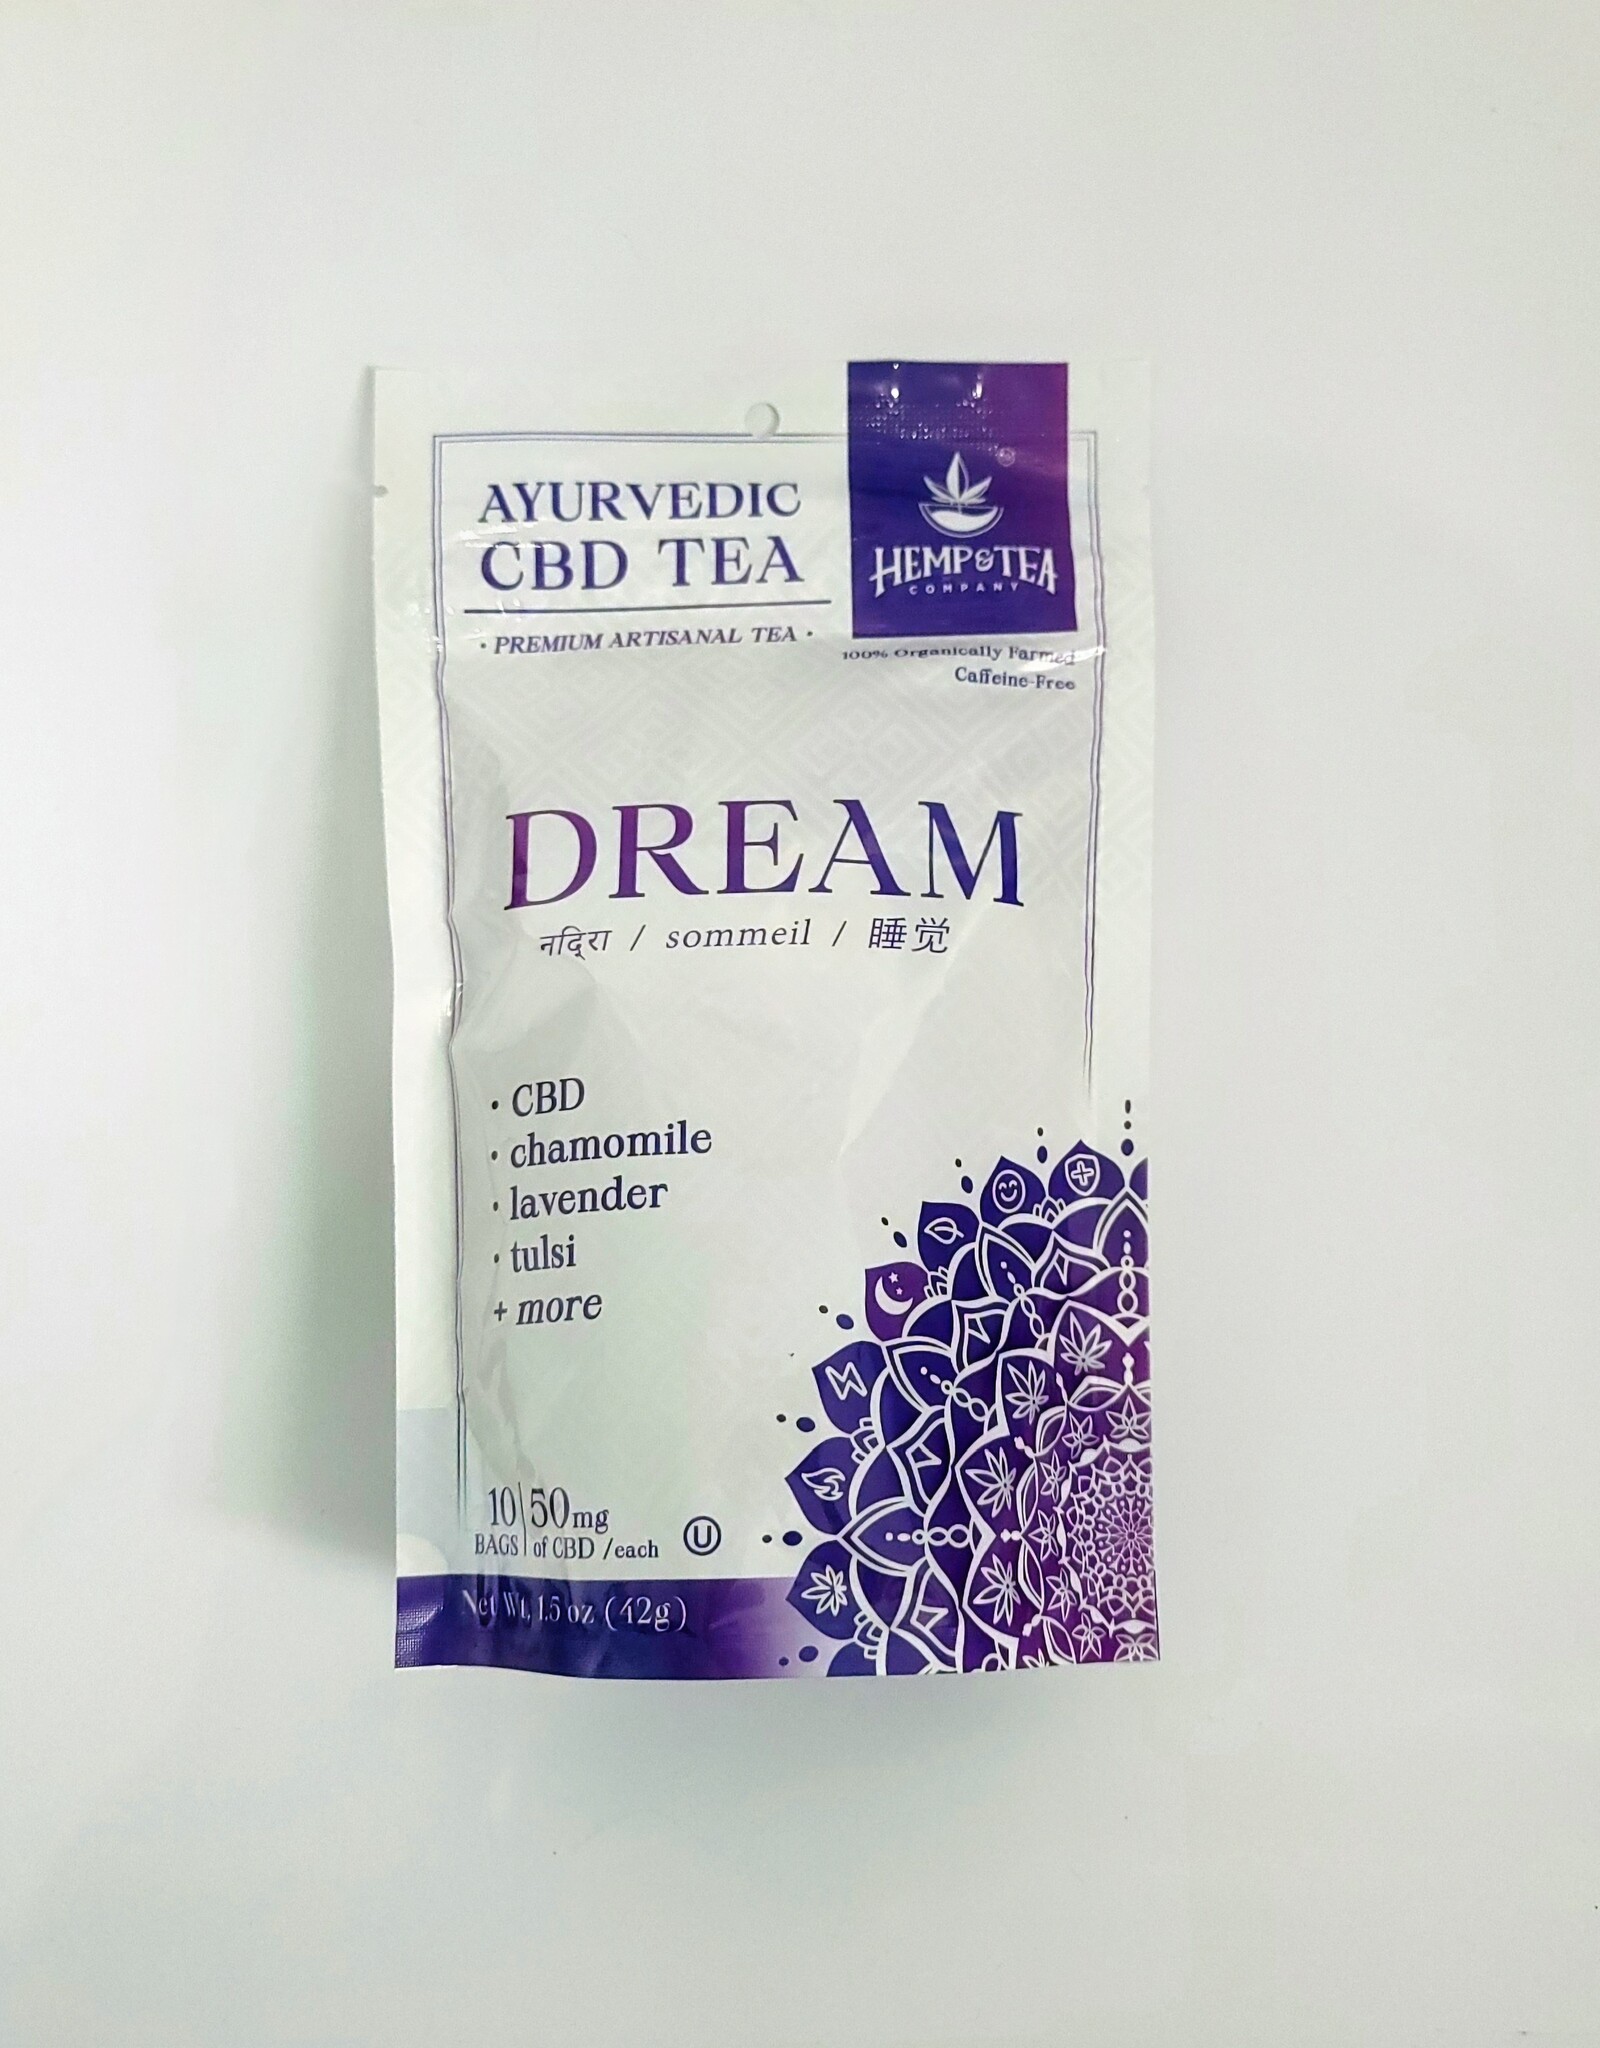 Hemp & Tea Company Hemp & Tea Comp. CBD Ayurvedic Tea Bags – Dream